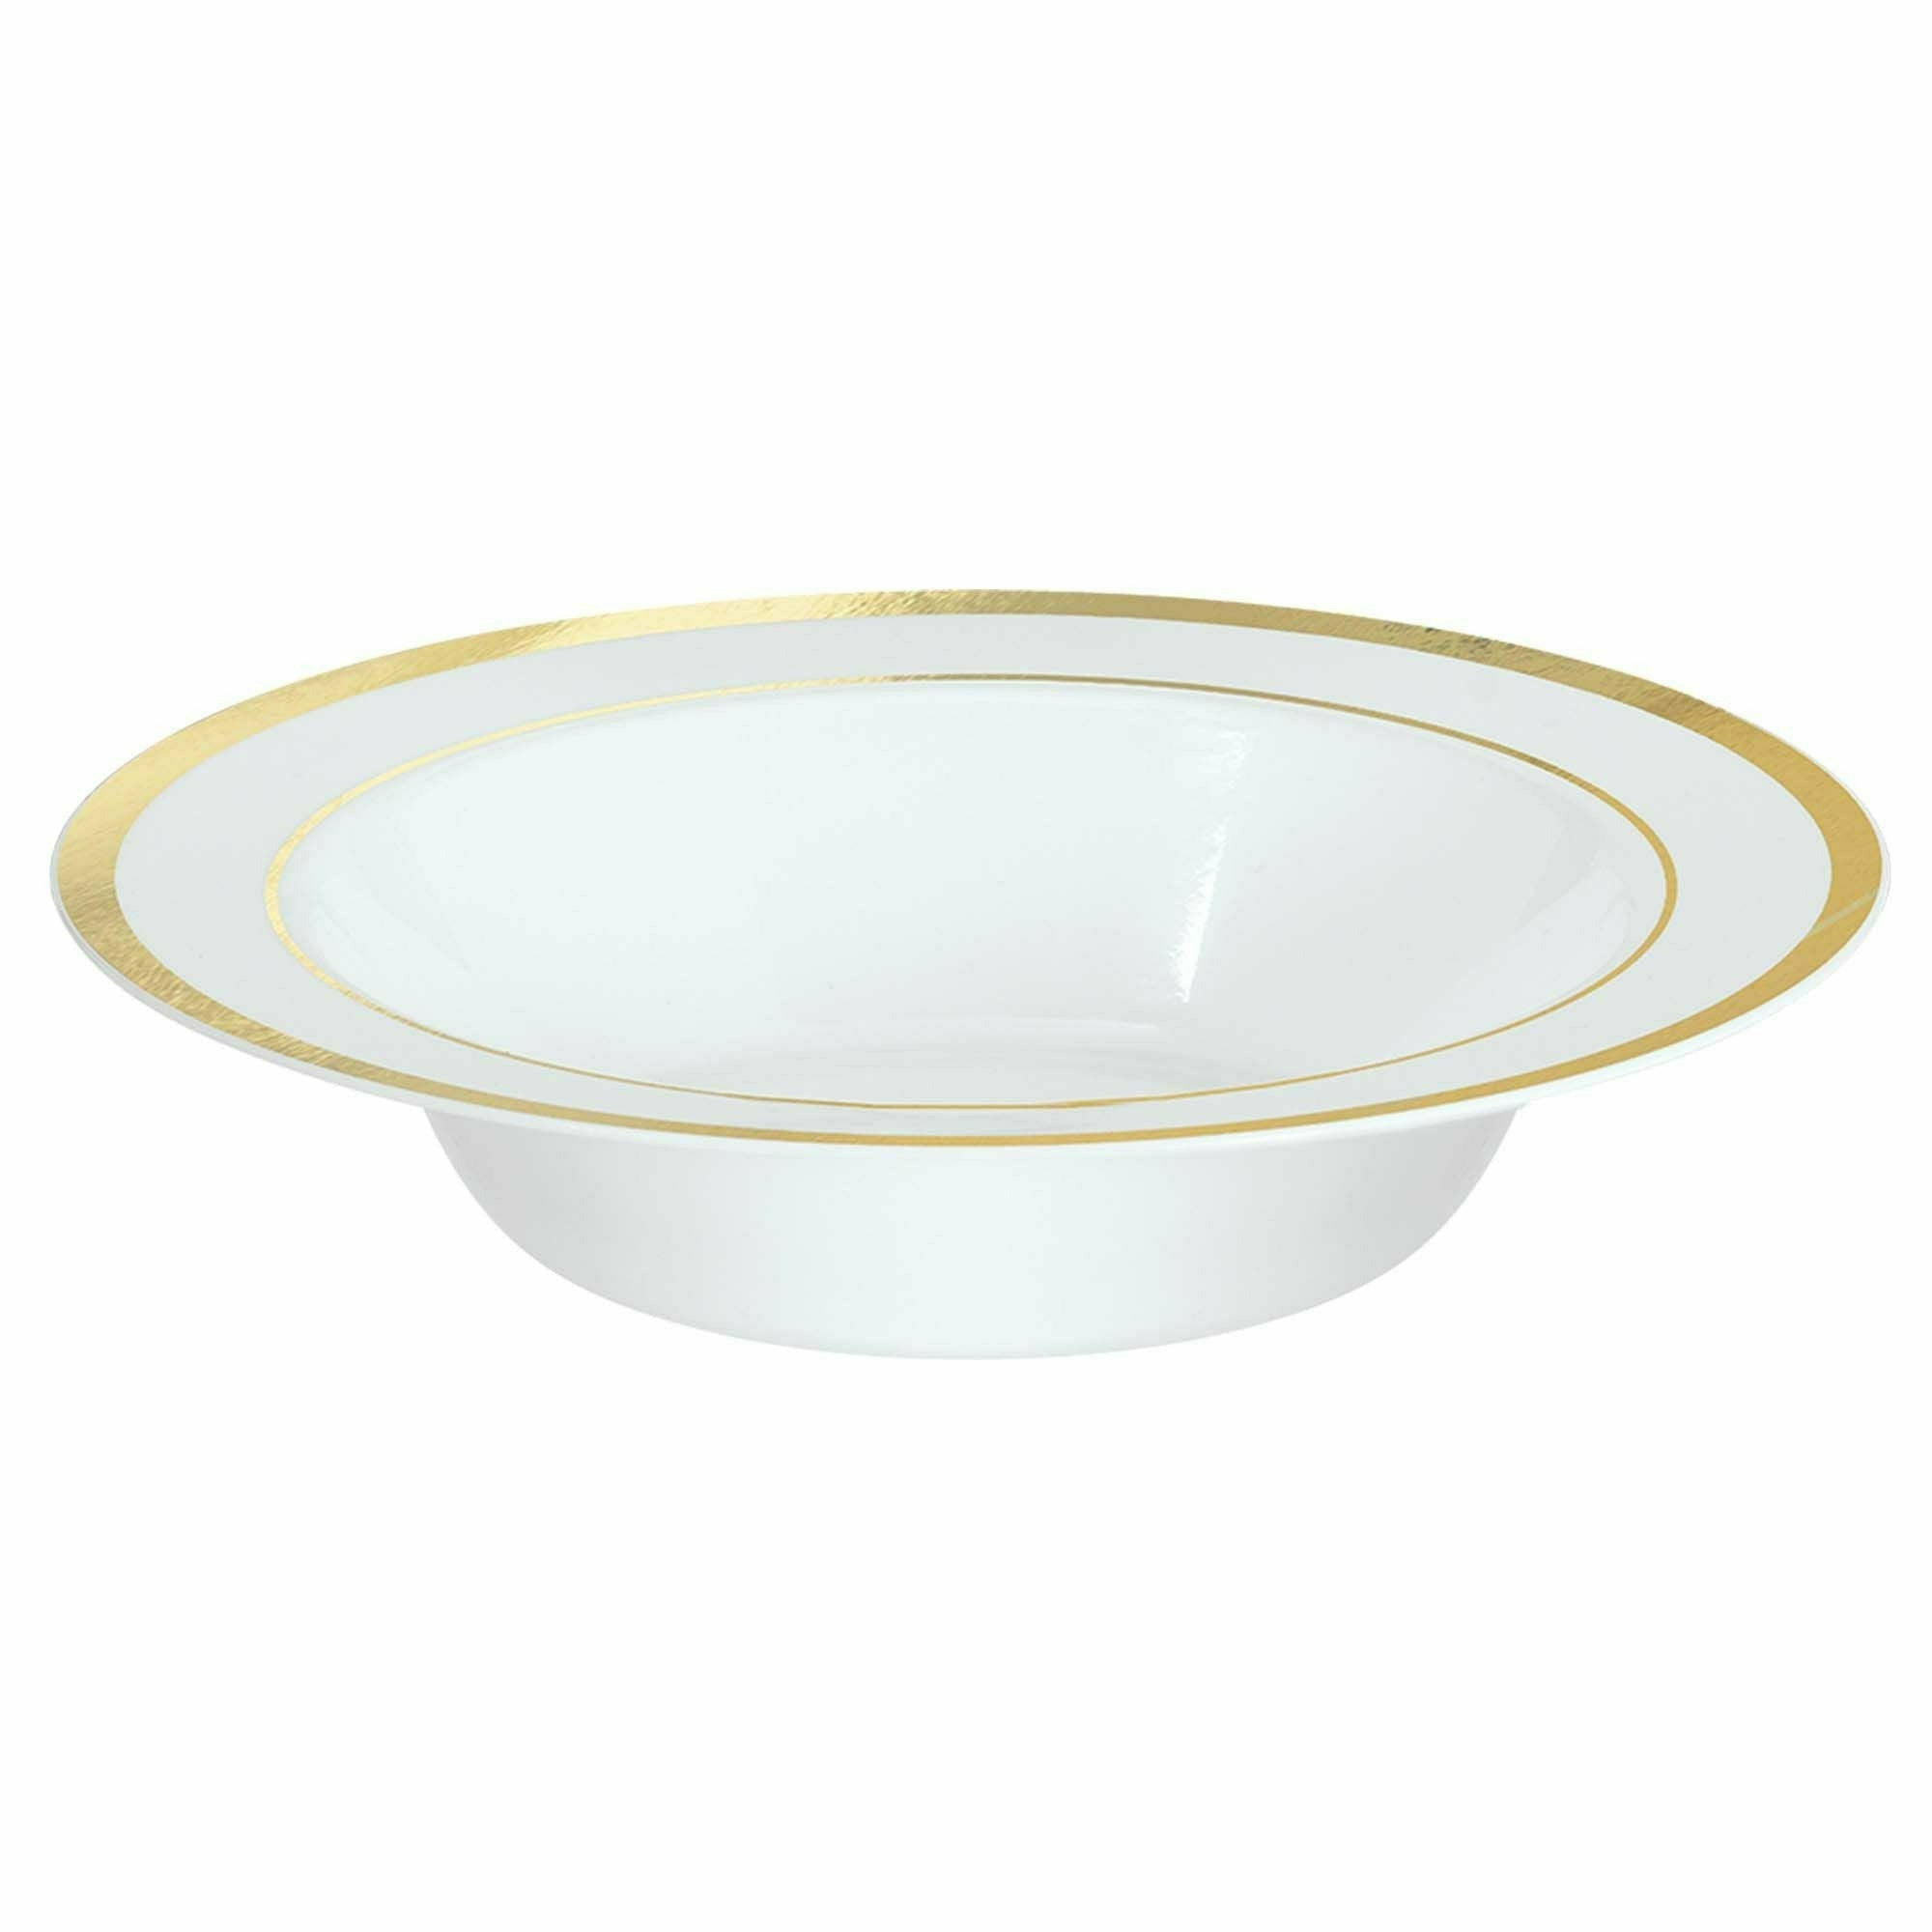 Amscan BASIC White Premium Plastic Bowls with Gold Trim